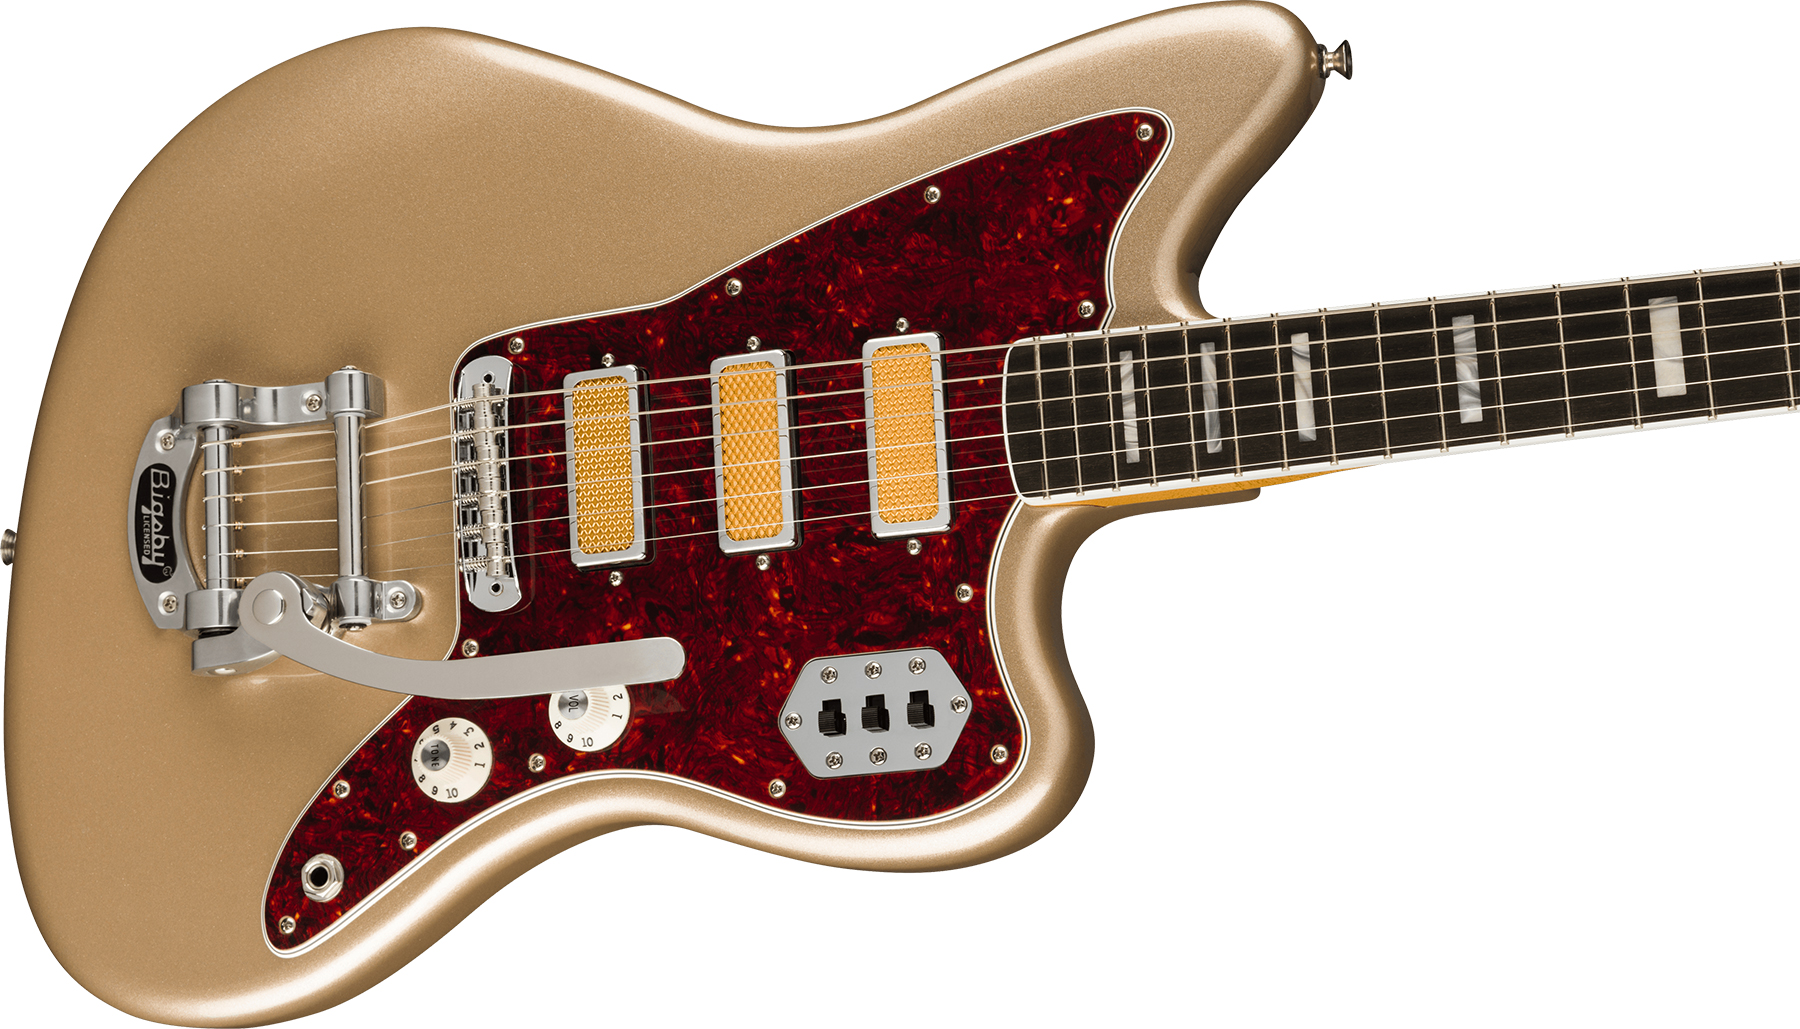 Fender Jazzmaster Gold Foil Ltd Mex 3mh Trem Bigsby Eb - Shoreline Gold - Guitarra electrica retro rock - Variation 2